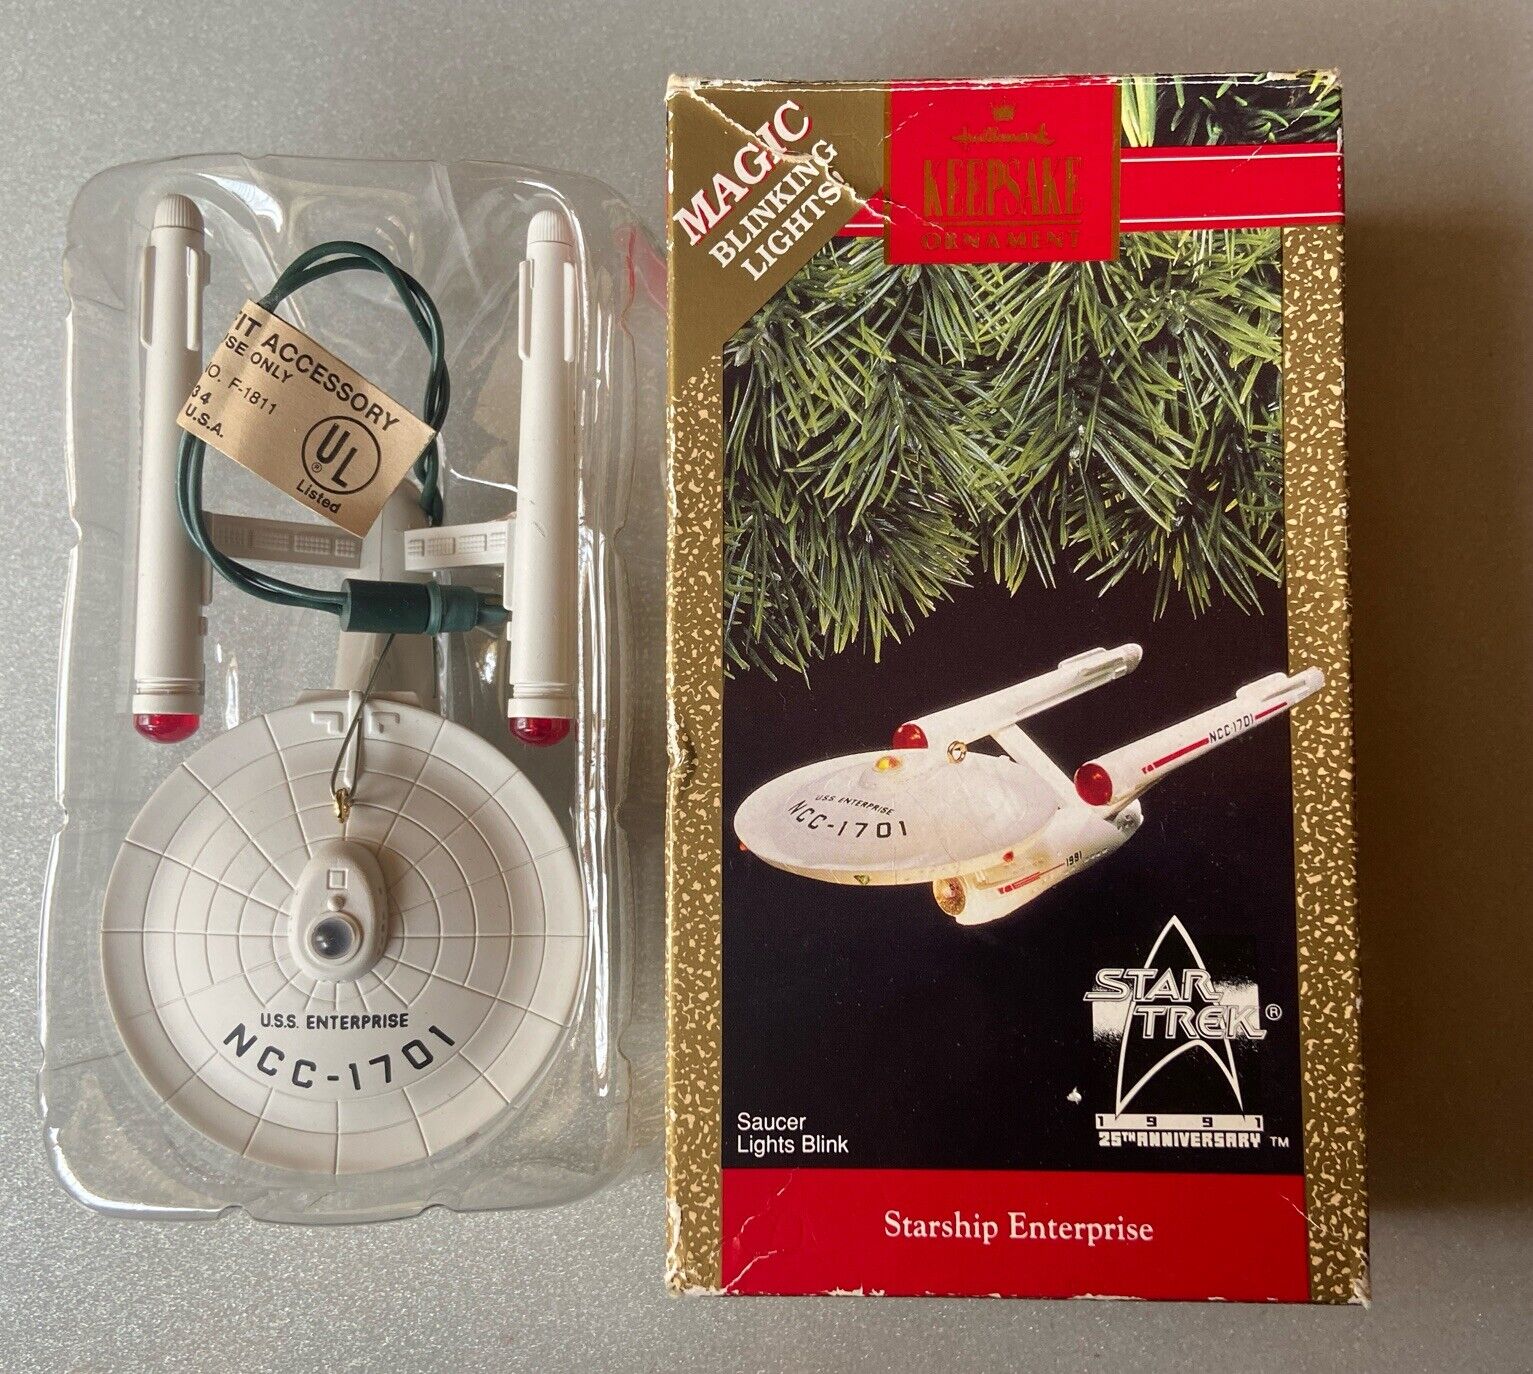 1991 Hallmark Keepsake Ornament Star Trek STARSHIP ENTERPRISE 25 Anniversary